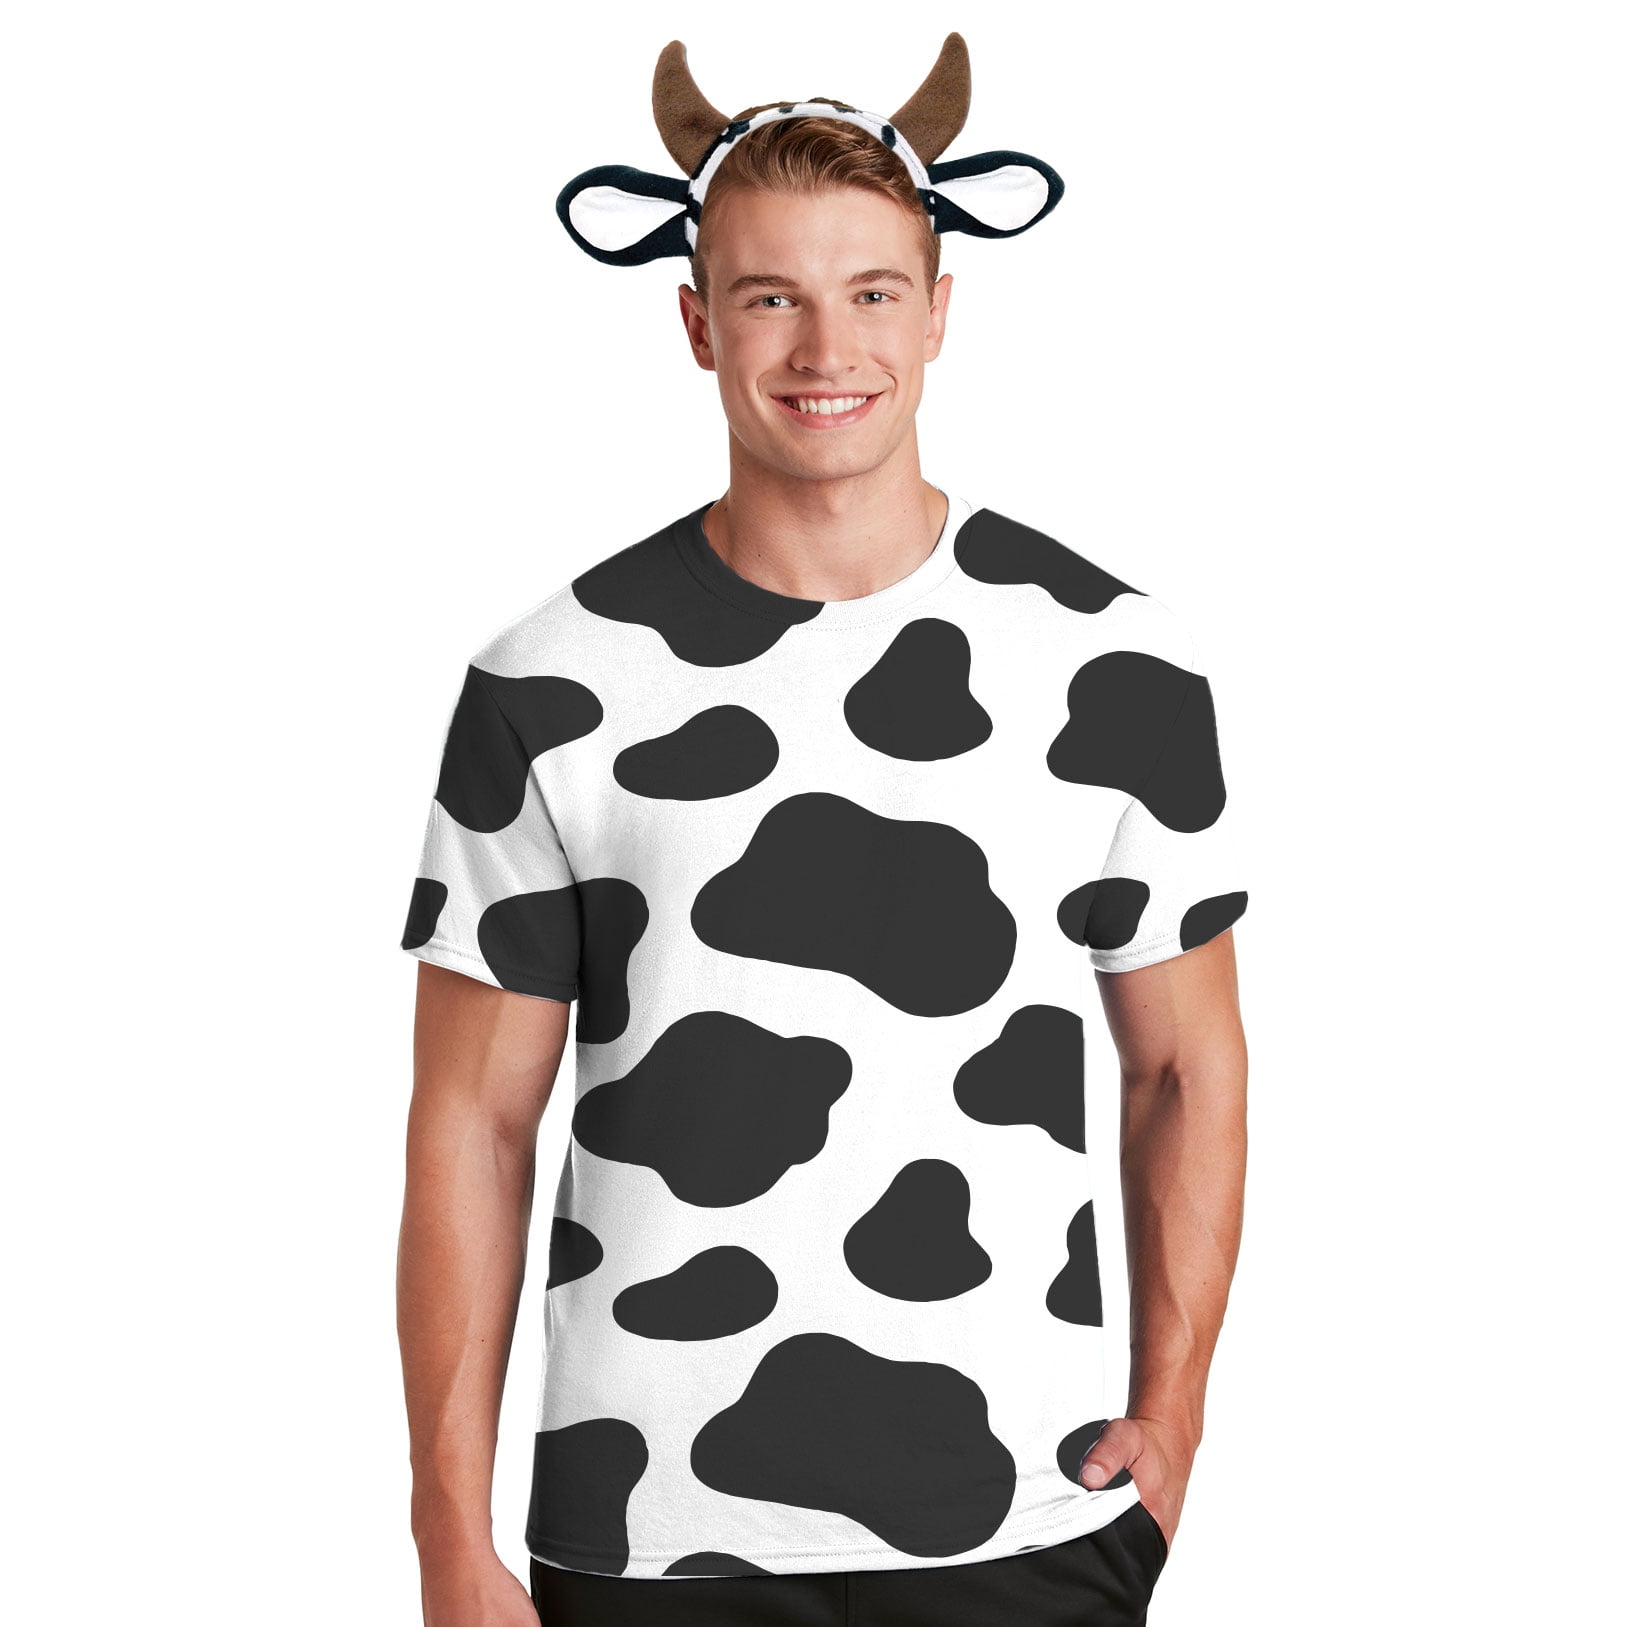 Cow Print Pattern Men Teens Boys Casual Short Sleeve Tops Crew T-Shirt Tee 